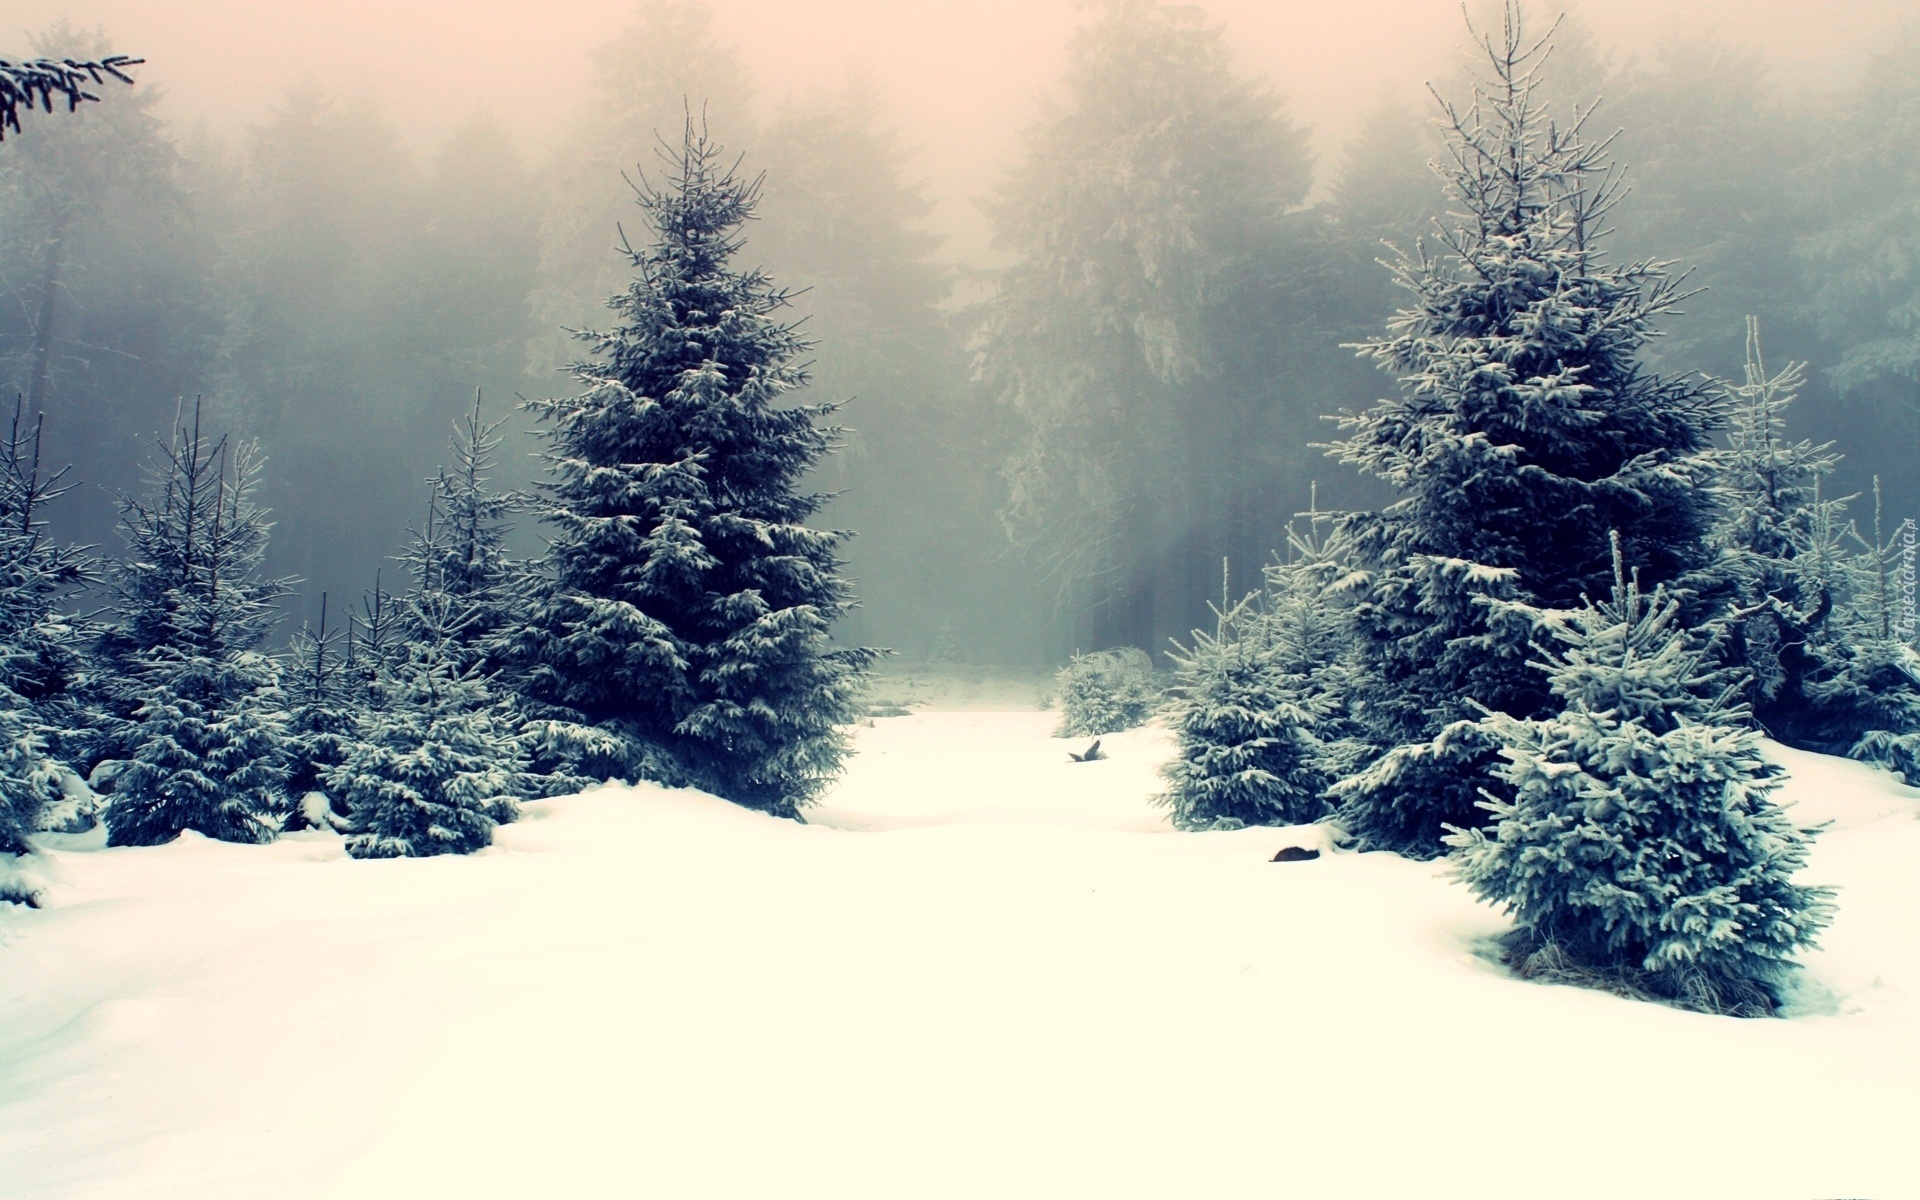 Las, Drzewa, Mgła, Zima